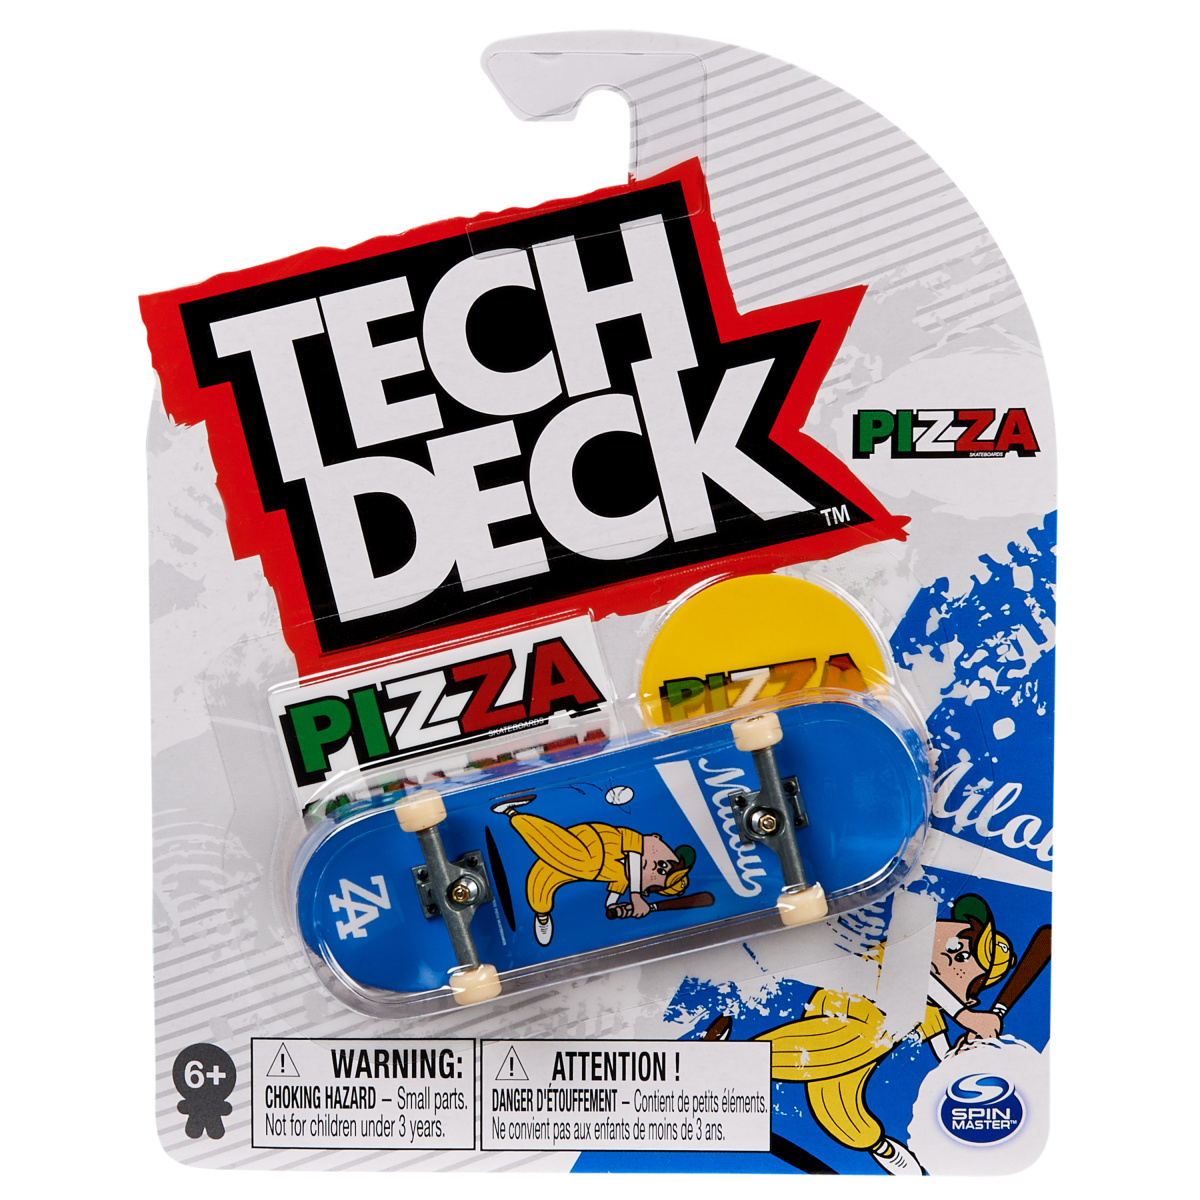 Mini placa skateboard Tech Deck, Pizza, 20141532